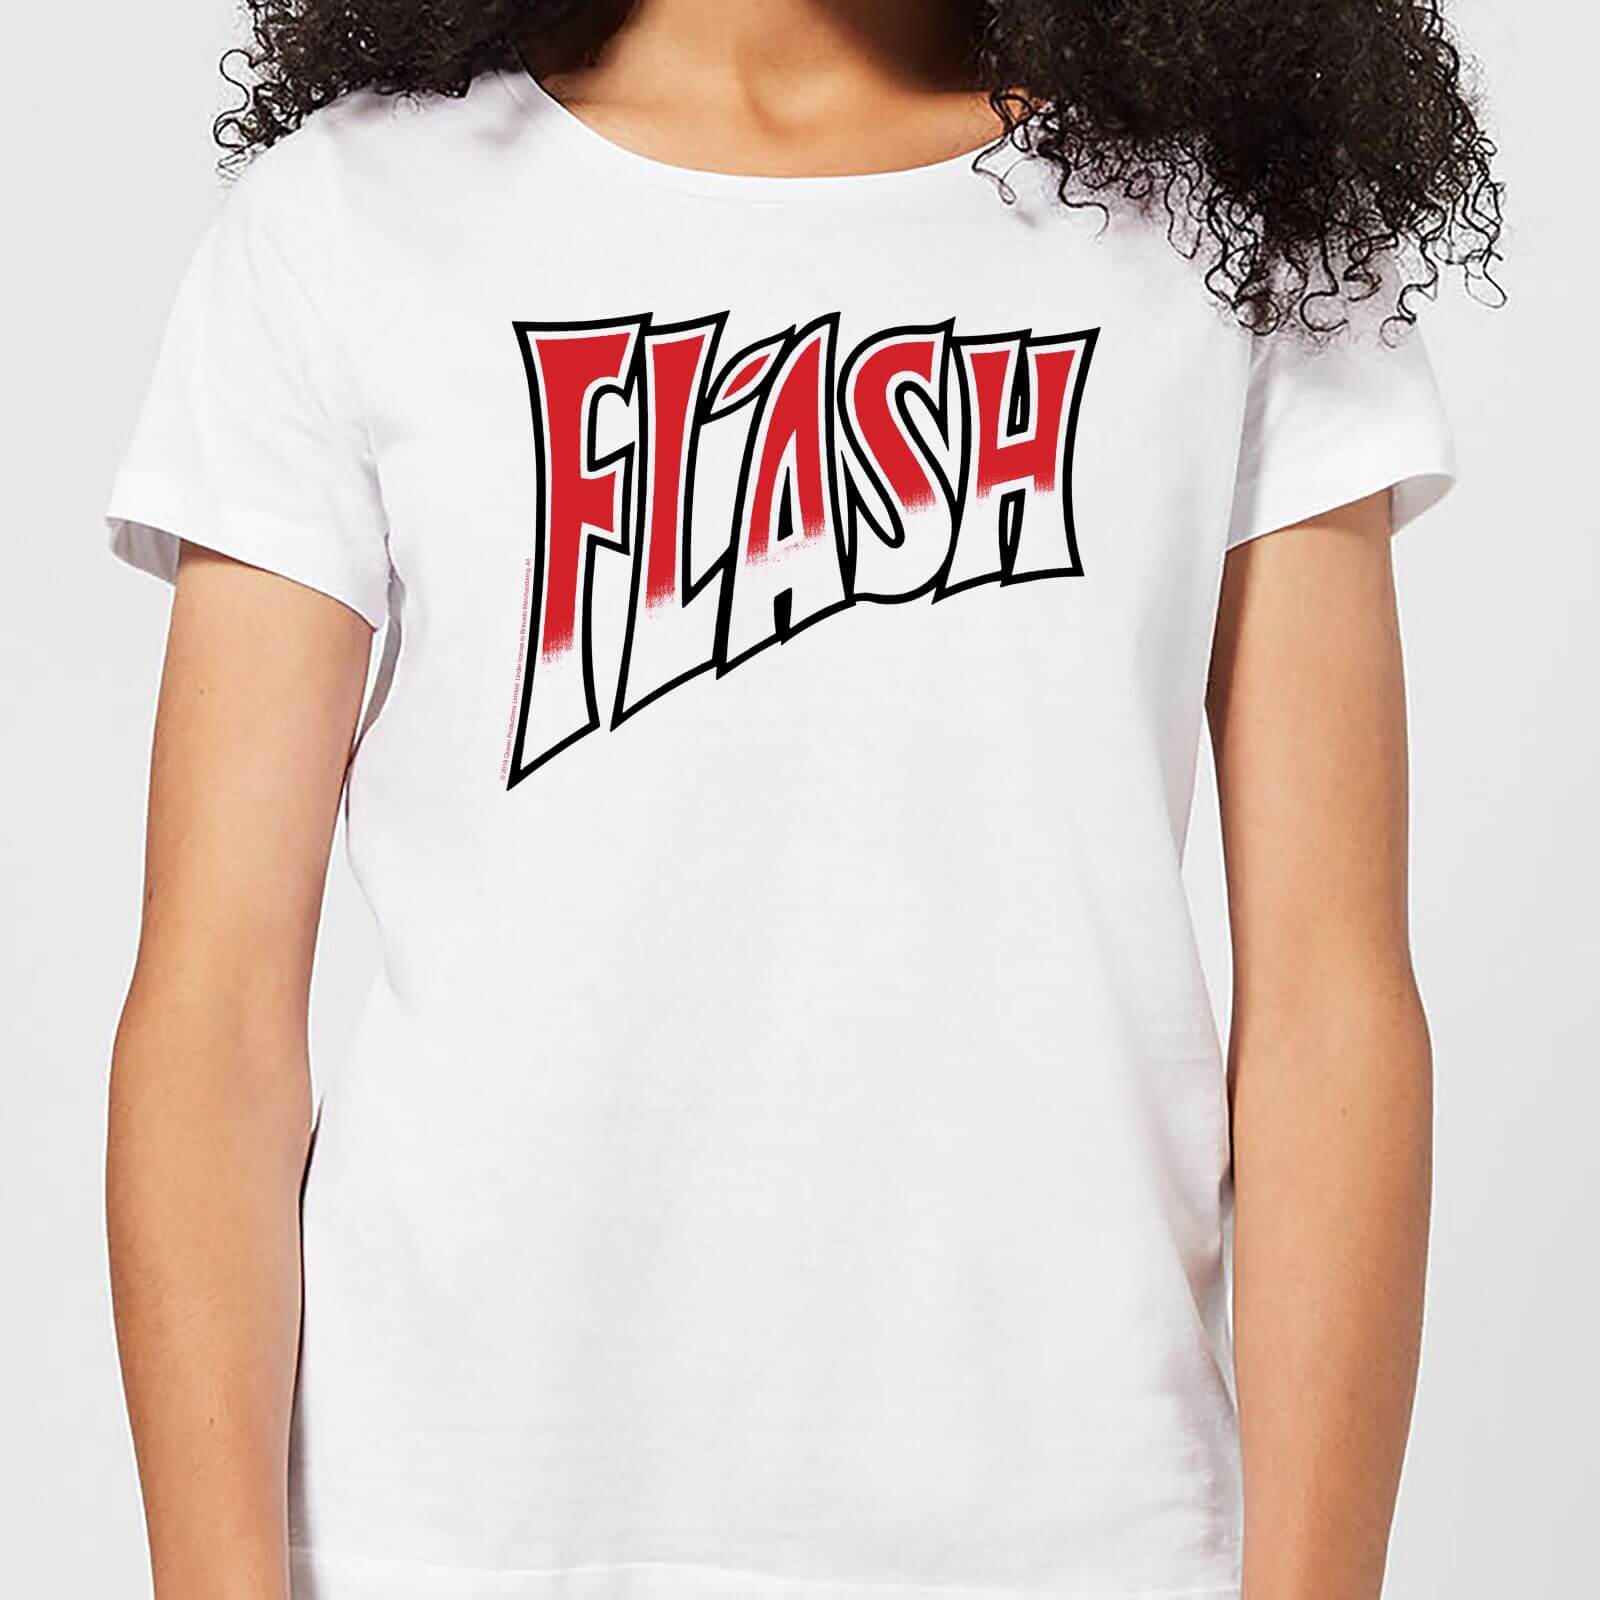 Queen Flash Women's T-Shirt - White - S